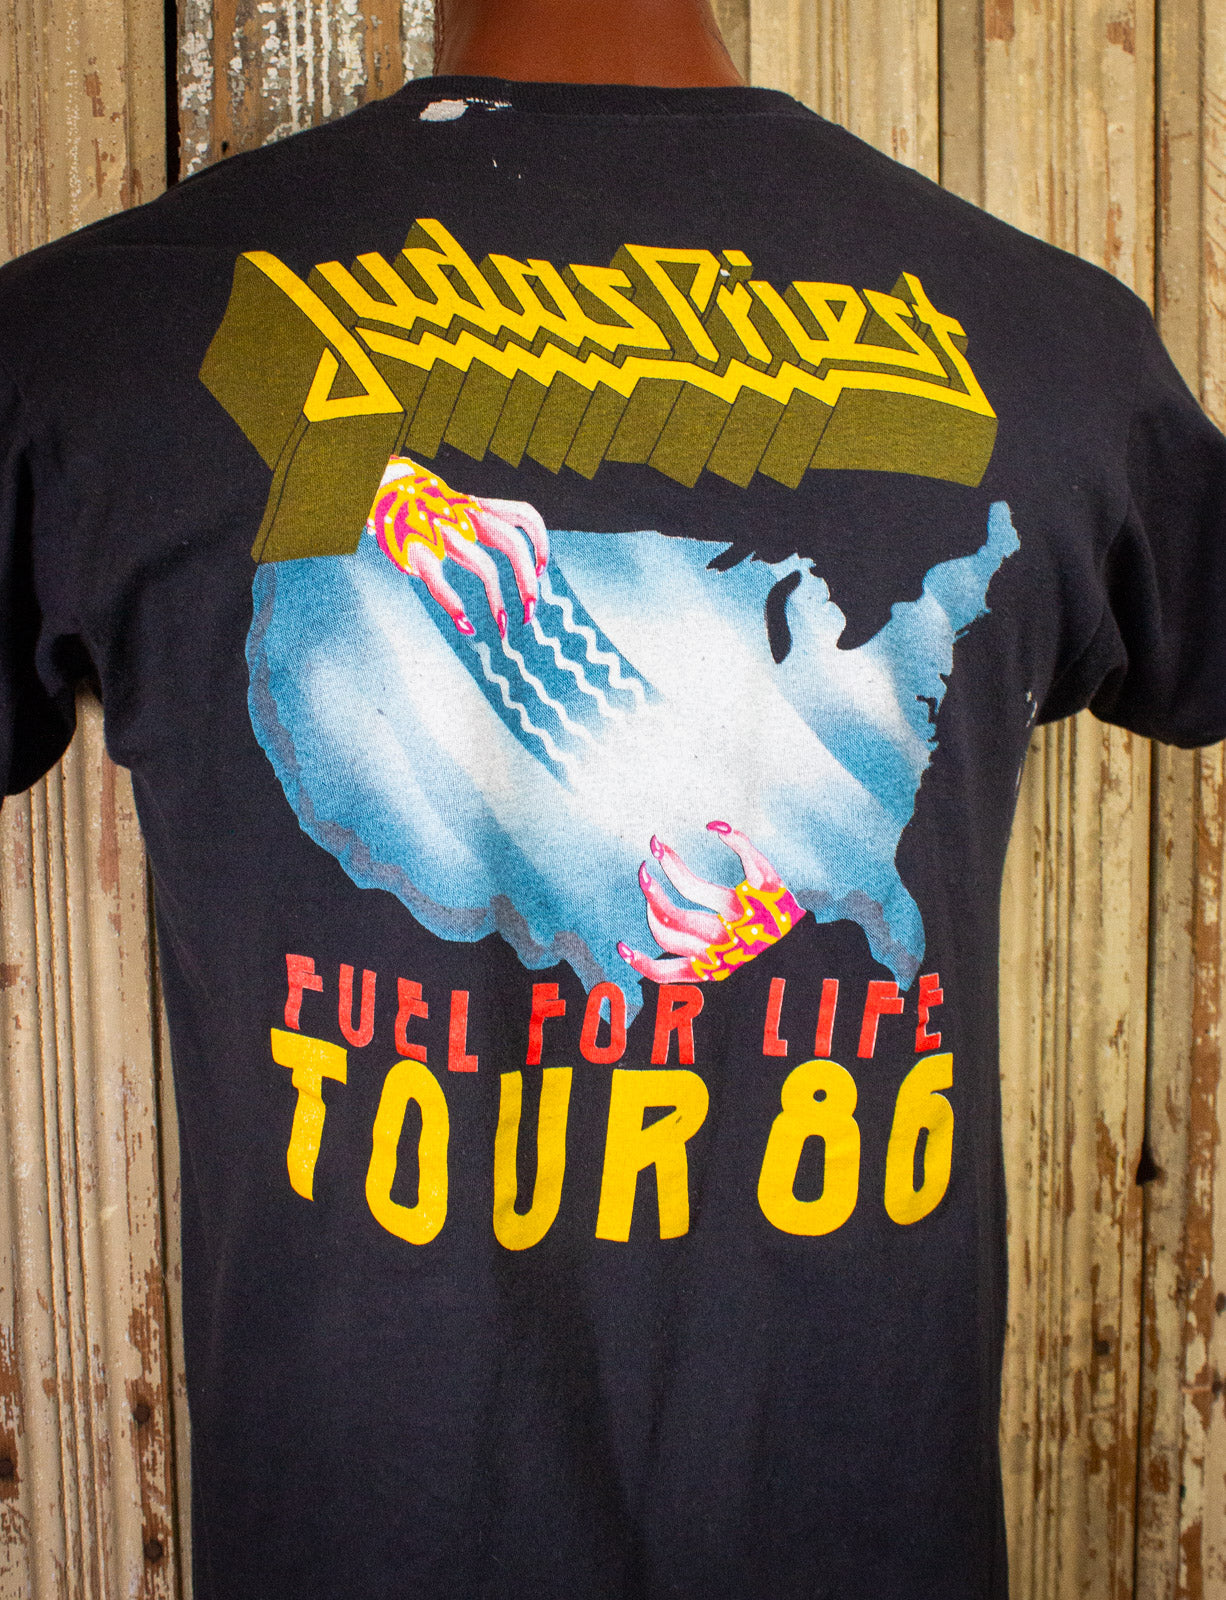 Vintage Judas Priest Fuel For Life Concert T Shirt 1986 Black LargeVintage Judas Priest Fuel For Life Concert T Shirt 1986 Black Large